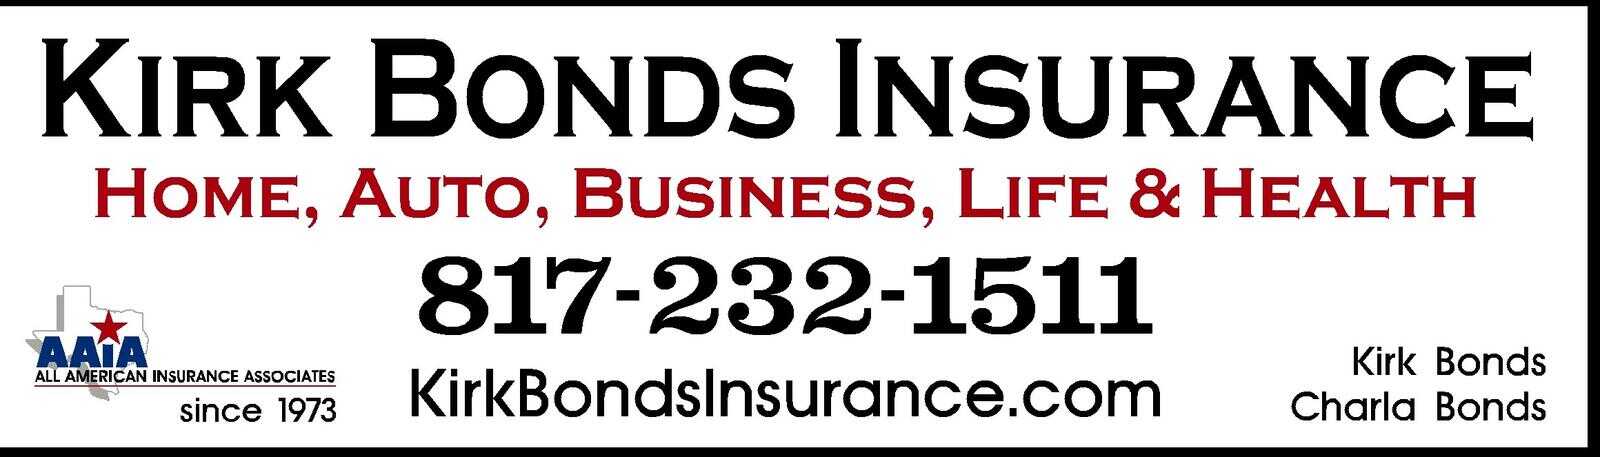 Kirk Bonds Insurance Services, LLC